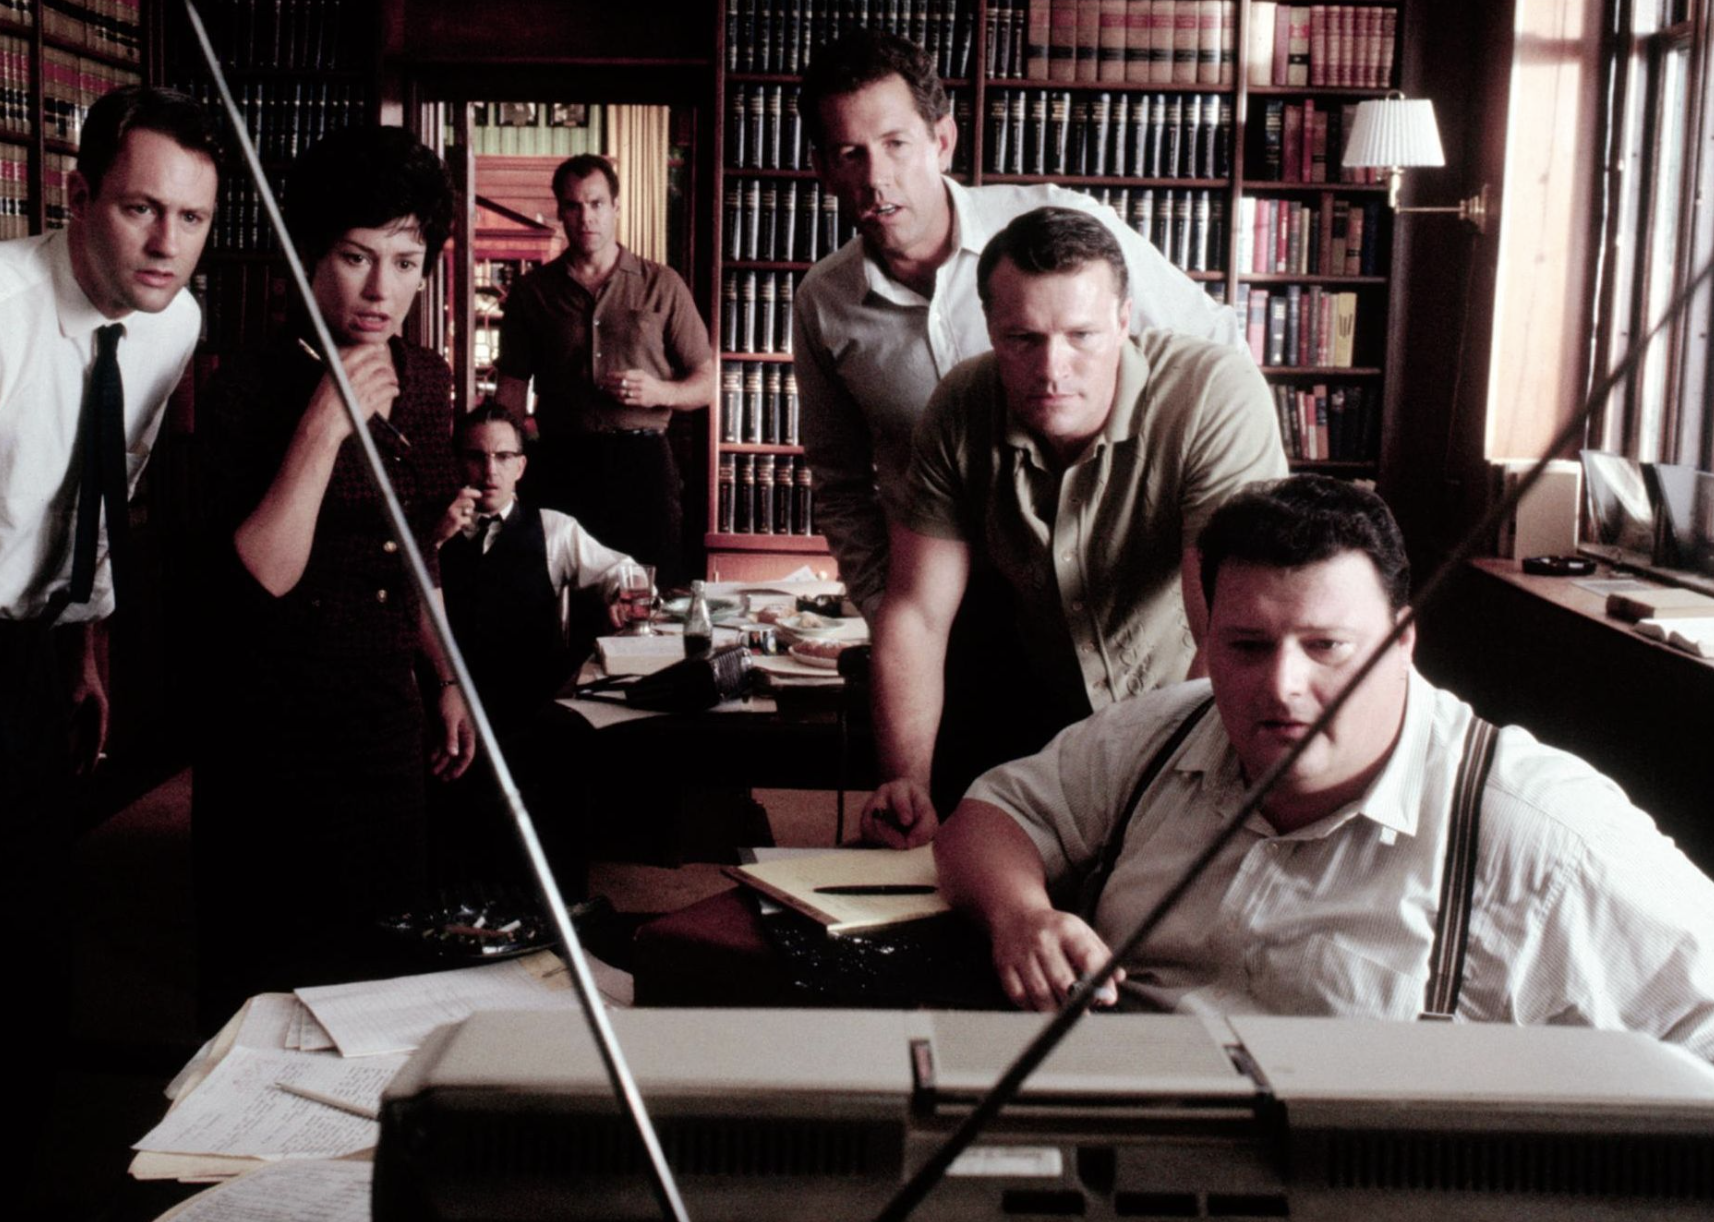 Kevin Costner, Wayne Knight, Gary Grubbs, Laurie Metcalf, Michael Rooker, and Jay O. Sanders in "JFK"